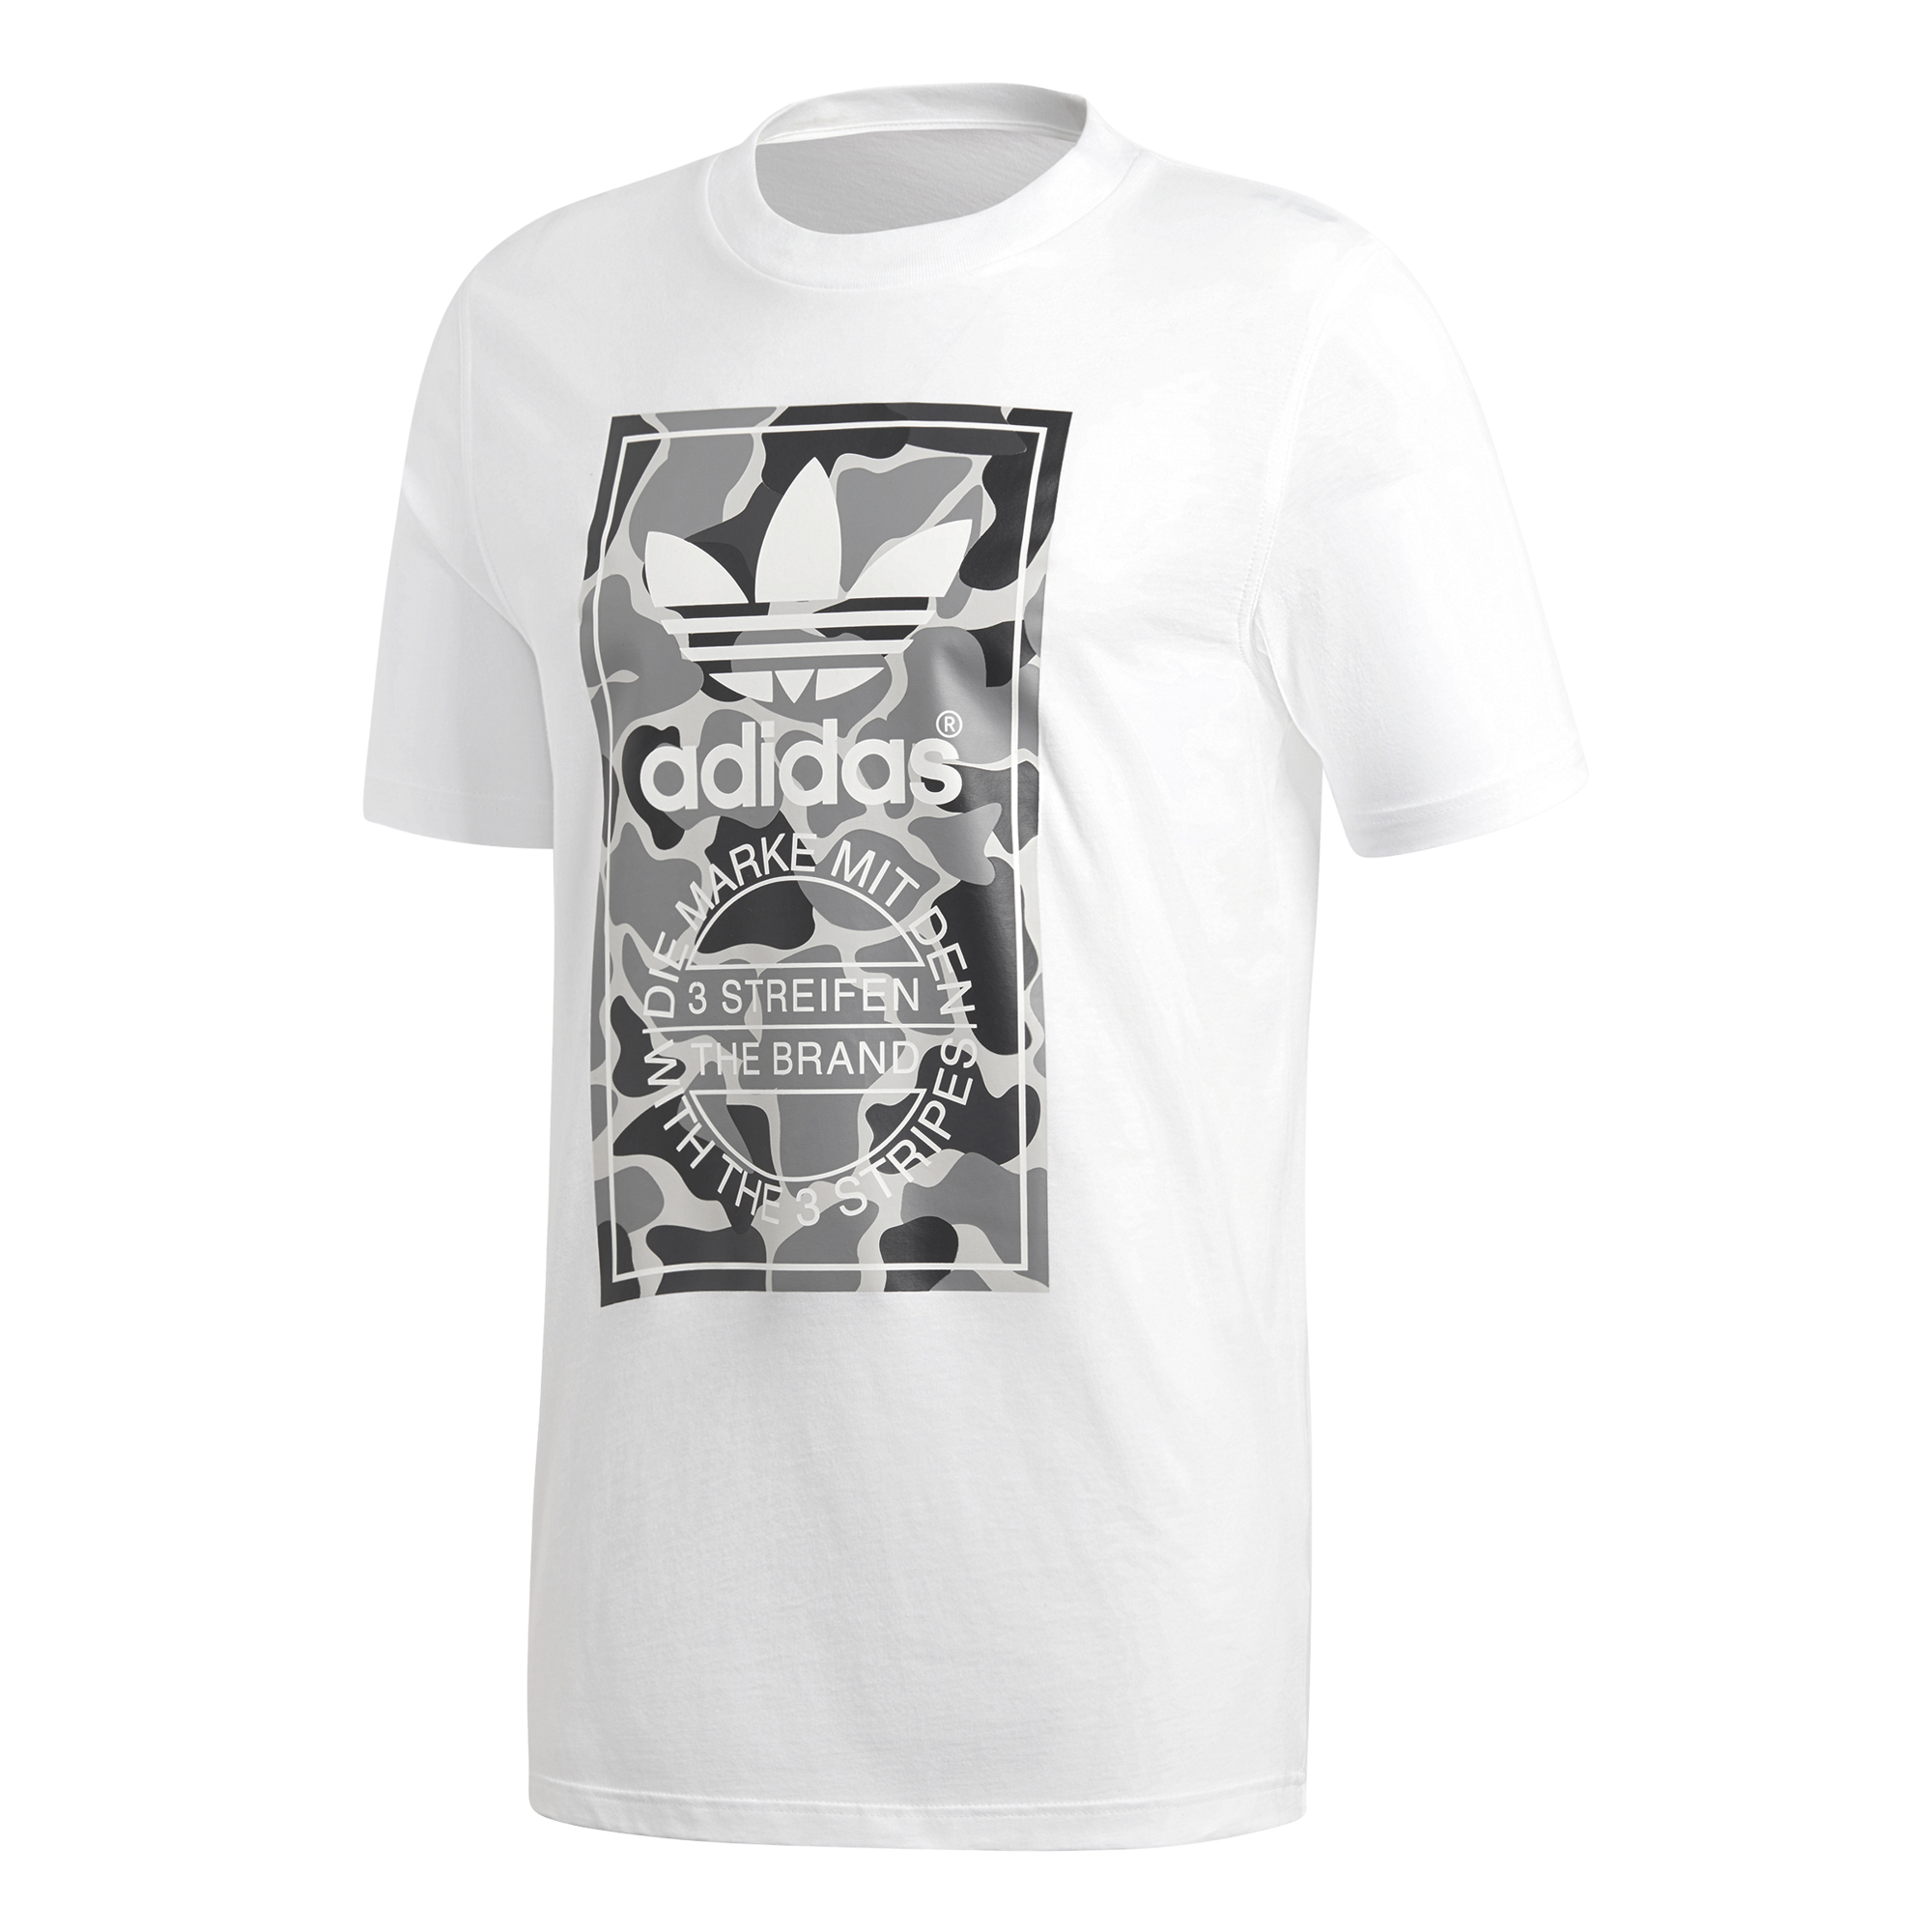 Adidas Originals Camo Tounge Label Tee (White)